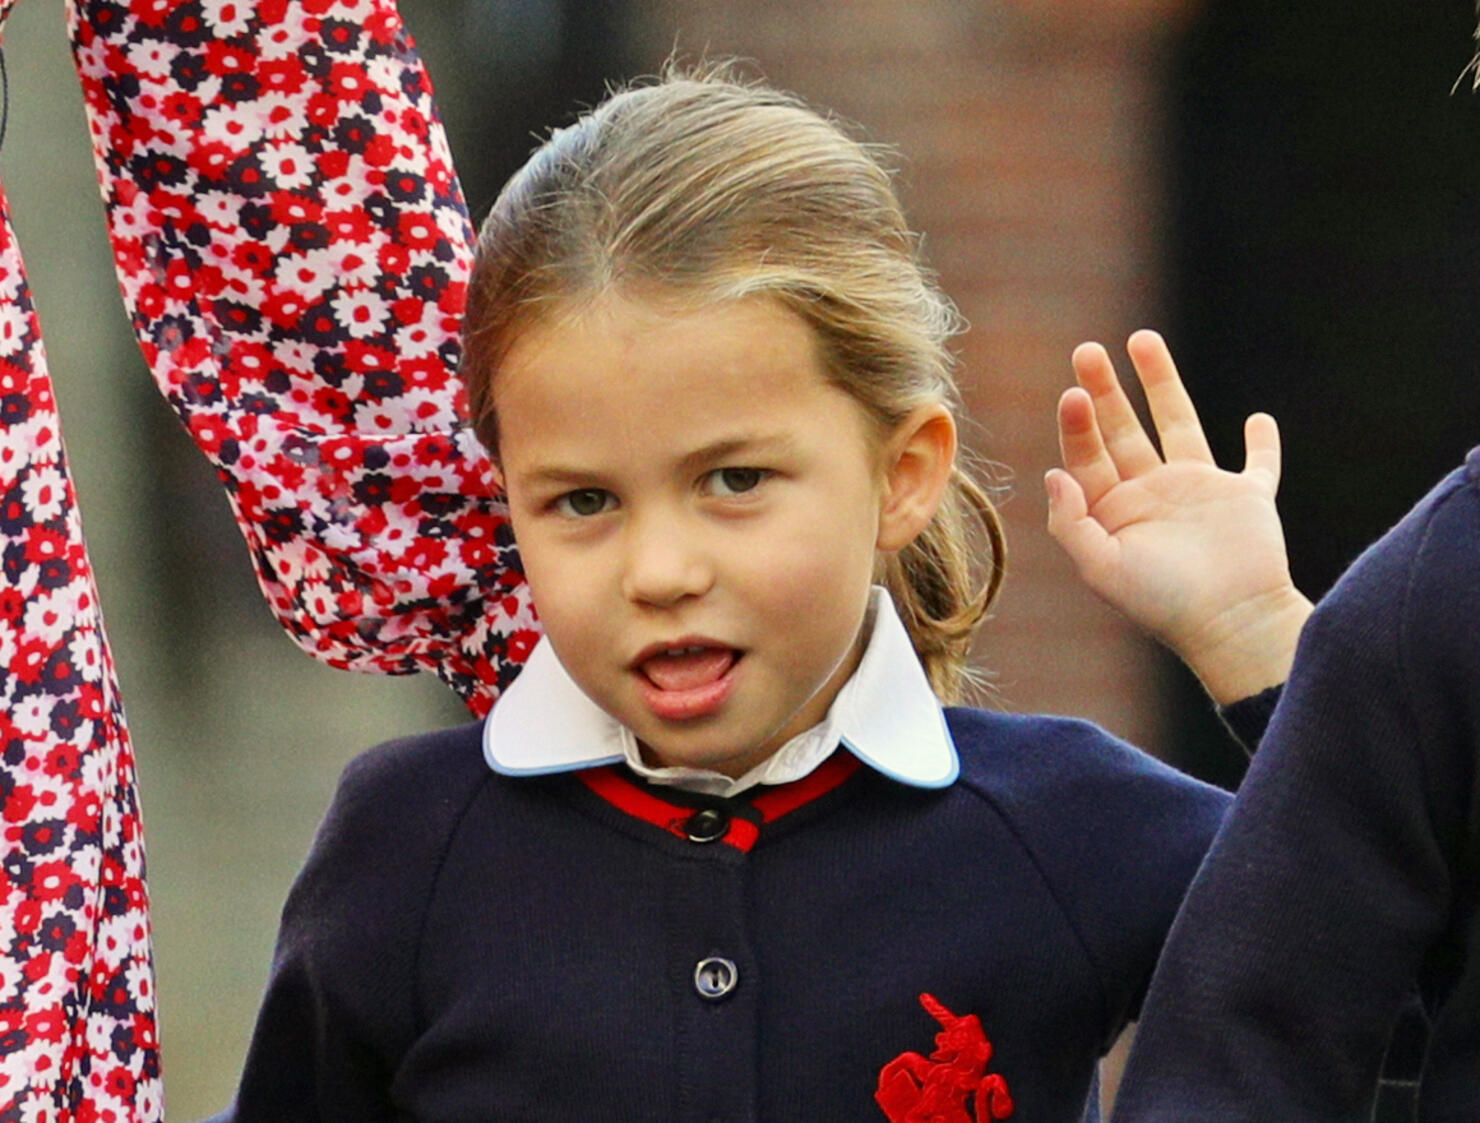 Royal Family Celebrates Princess Charlotte's 6th Birthday With New